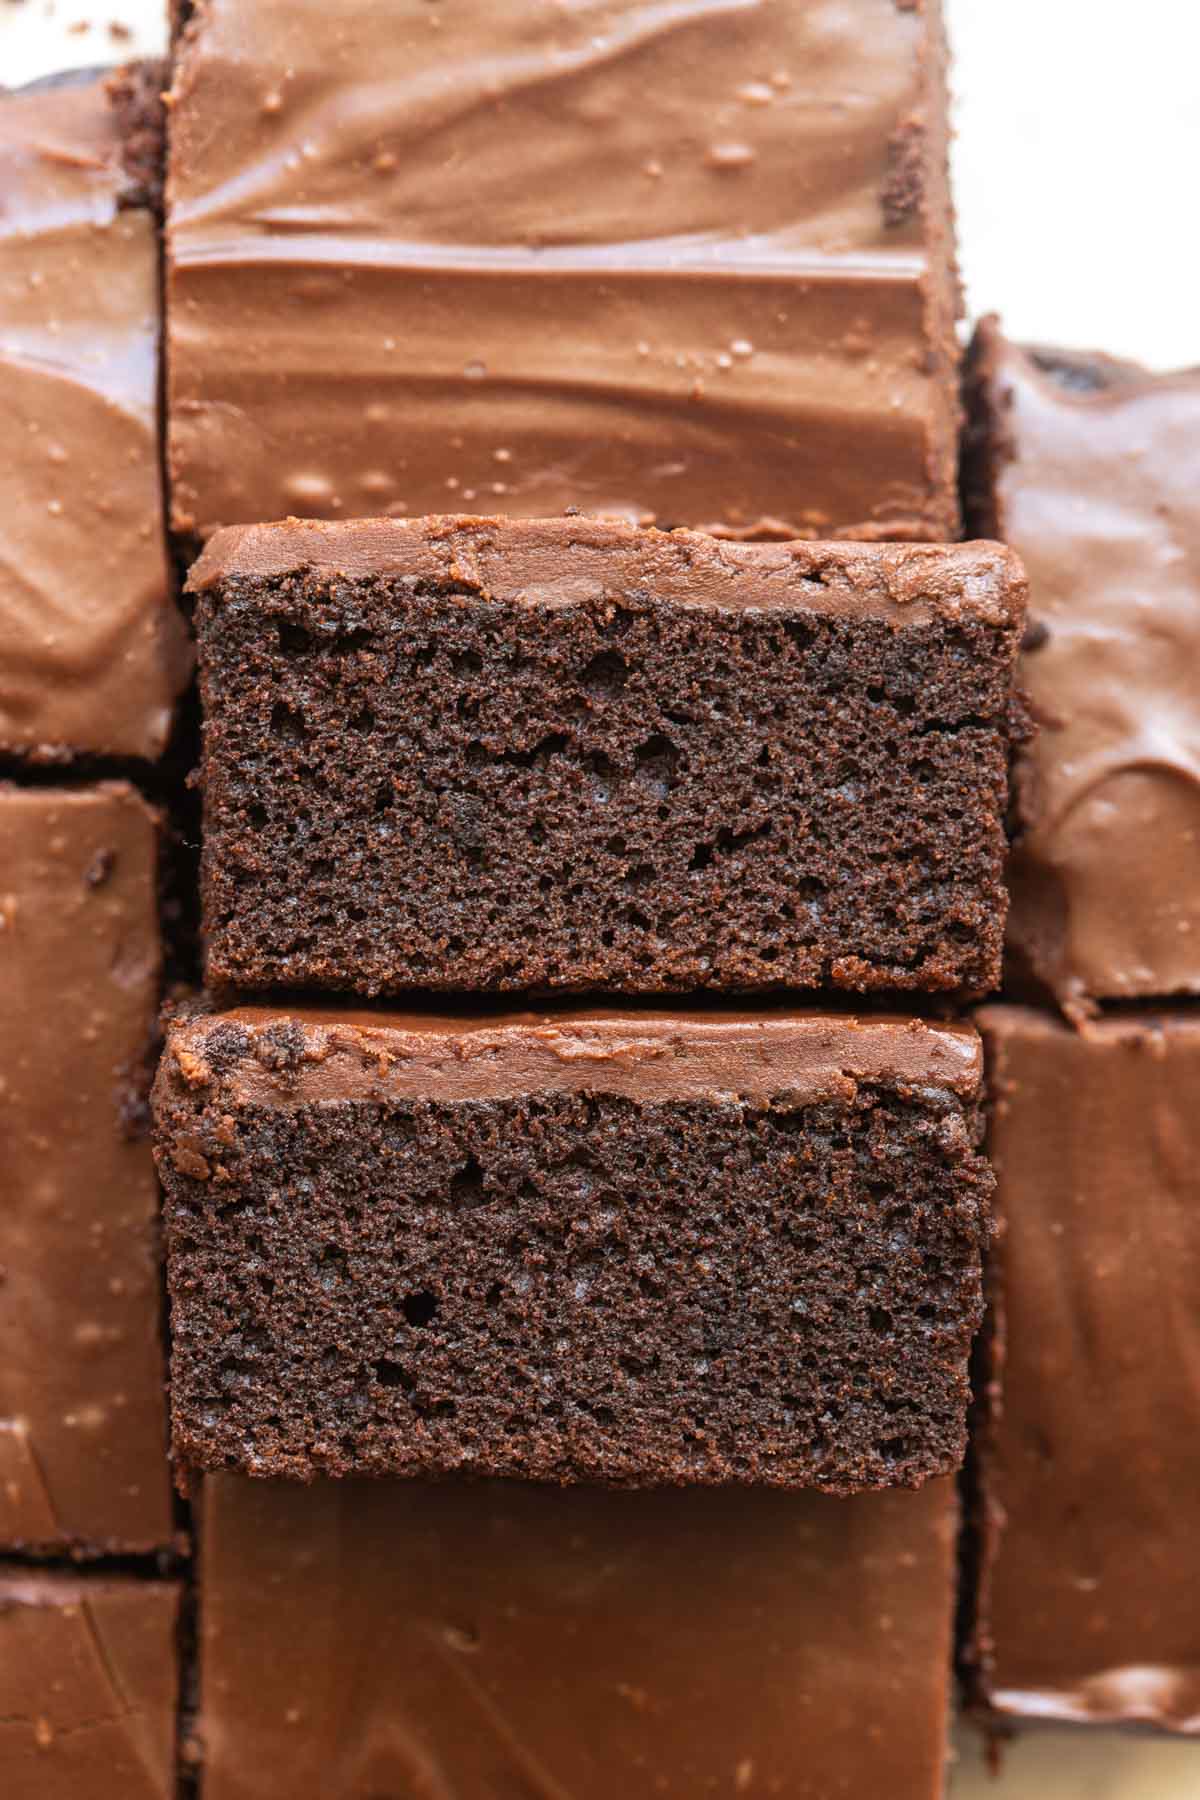 two ingredient chocolate cake recipe.